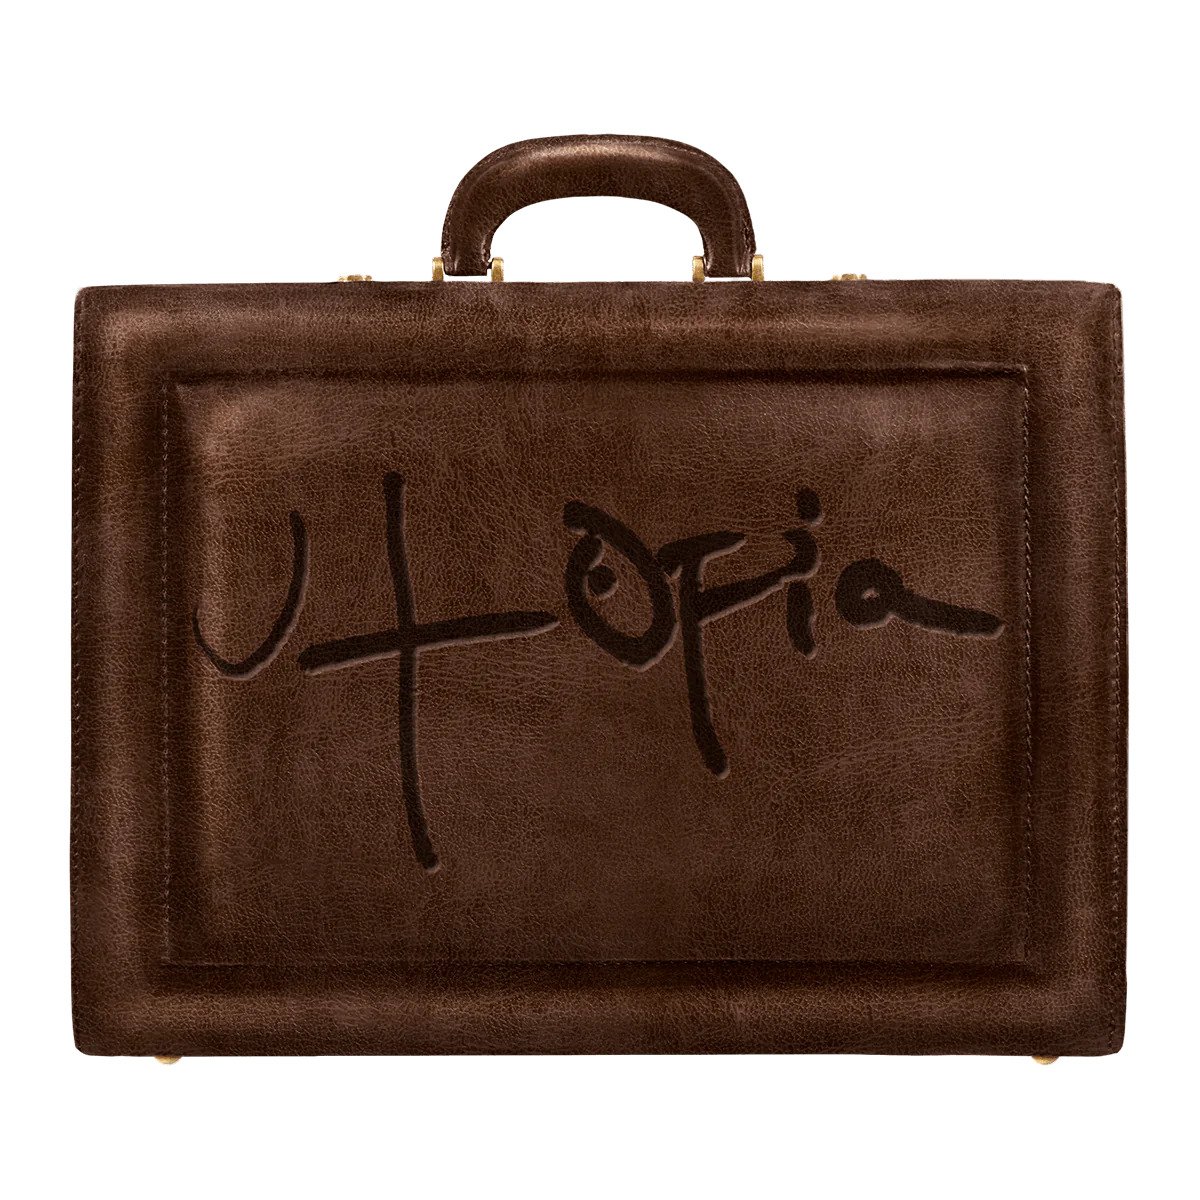 Travis Scott's 'Utopia' merch drop includes leather suitcase, sneakers